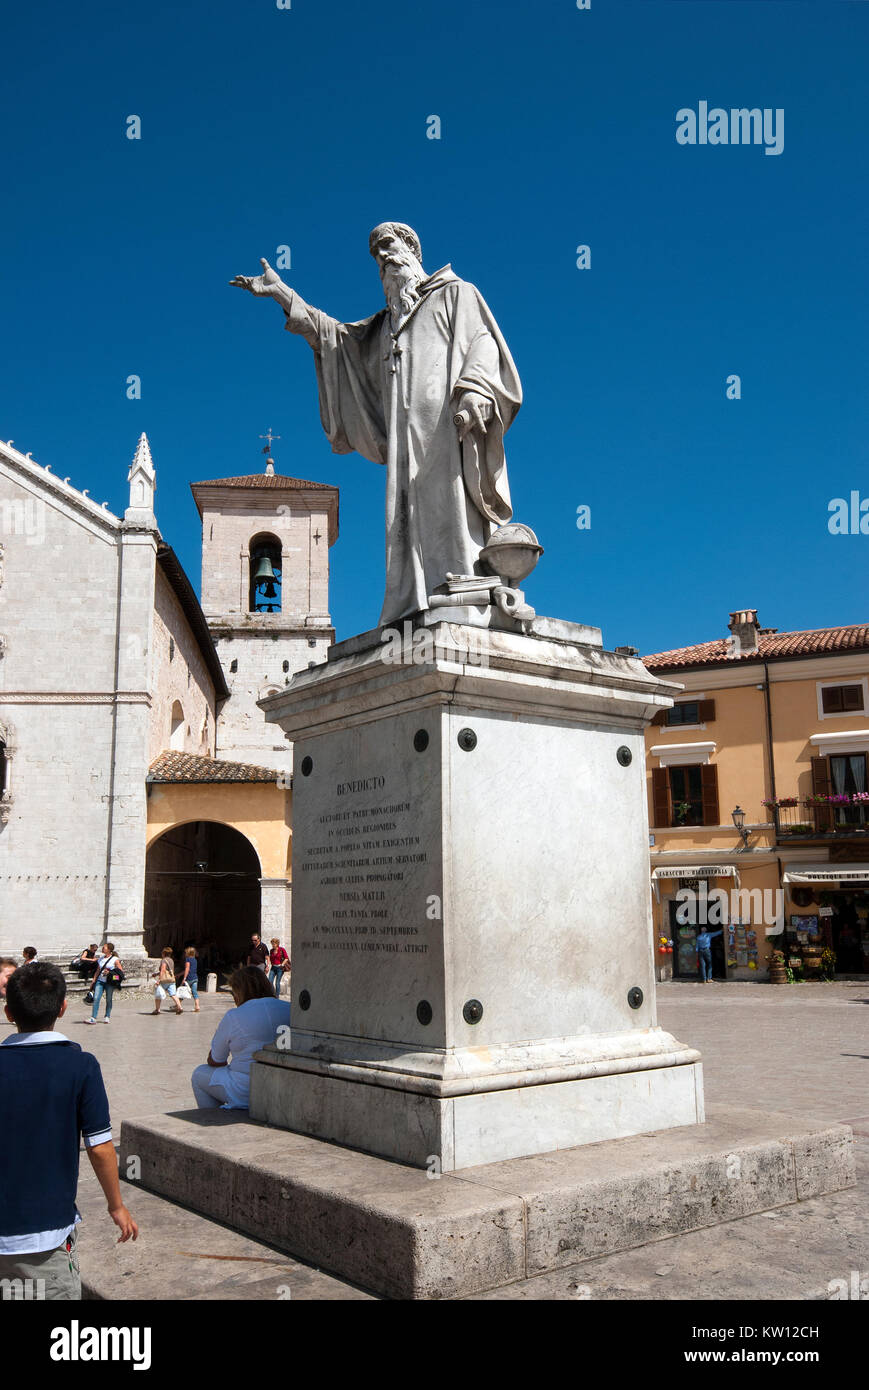 En statue de San Benedetto de Norcia (Giuseppe Prinzi -1880), Ombrie, Italie Banque D'Images